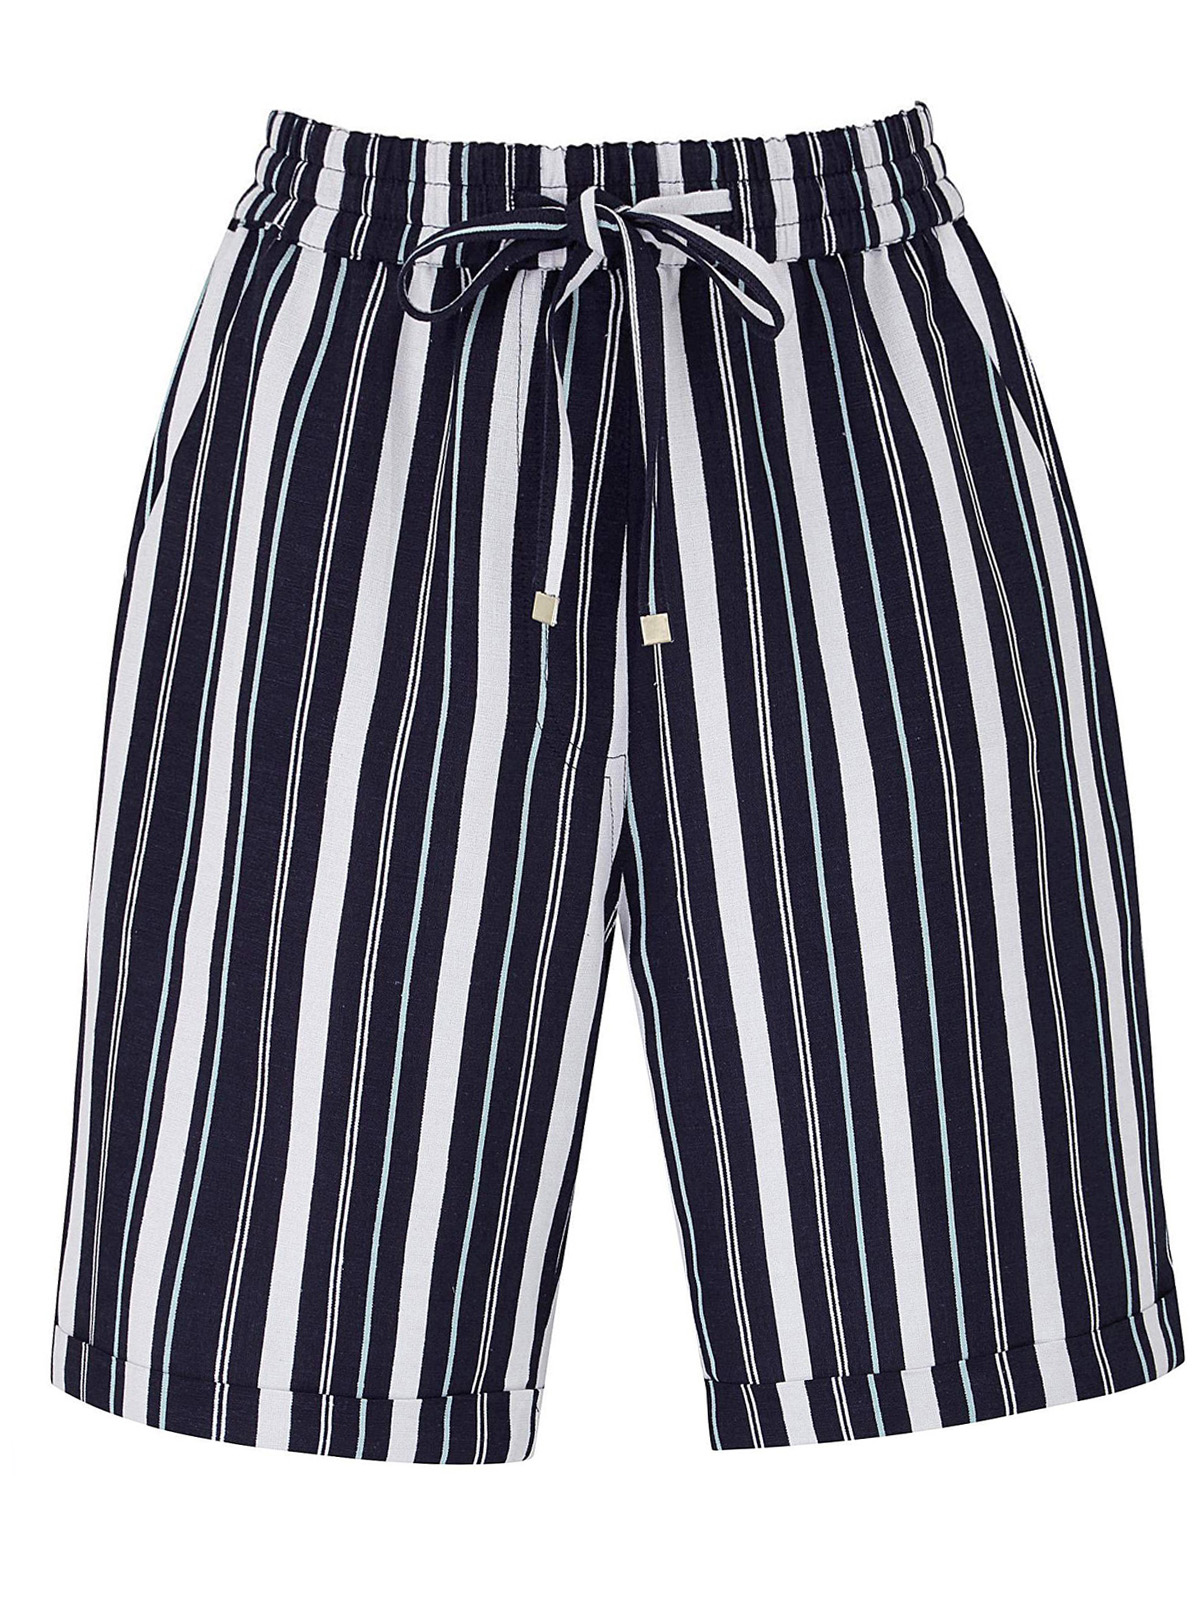 Capsule - - Capsule NAVY Petite Linen Blend Striped Easy Care Shorts ...